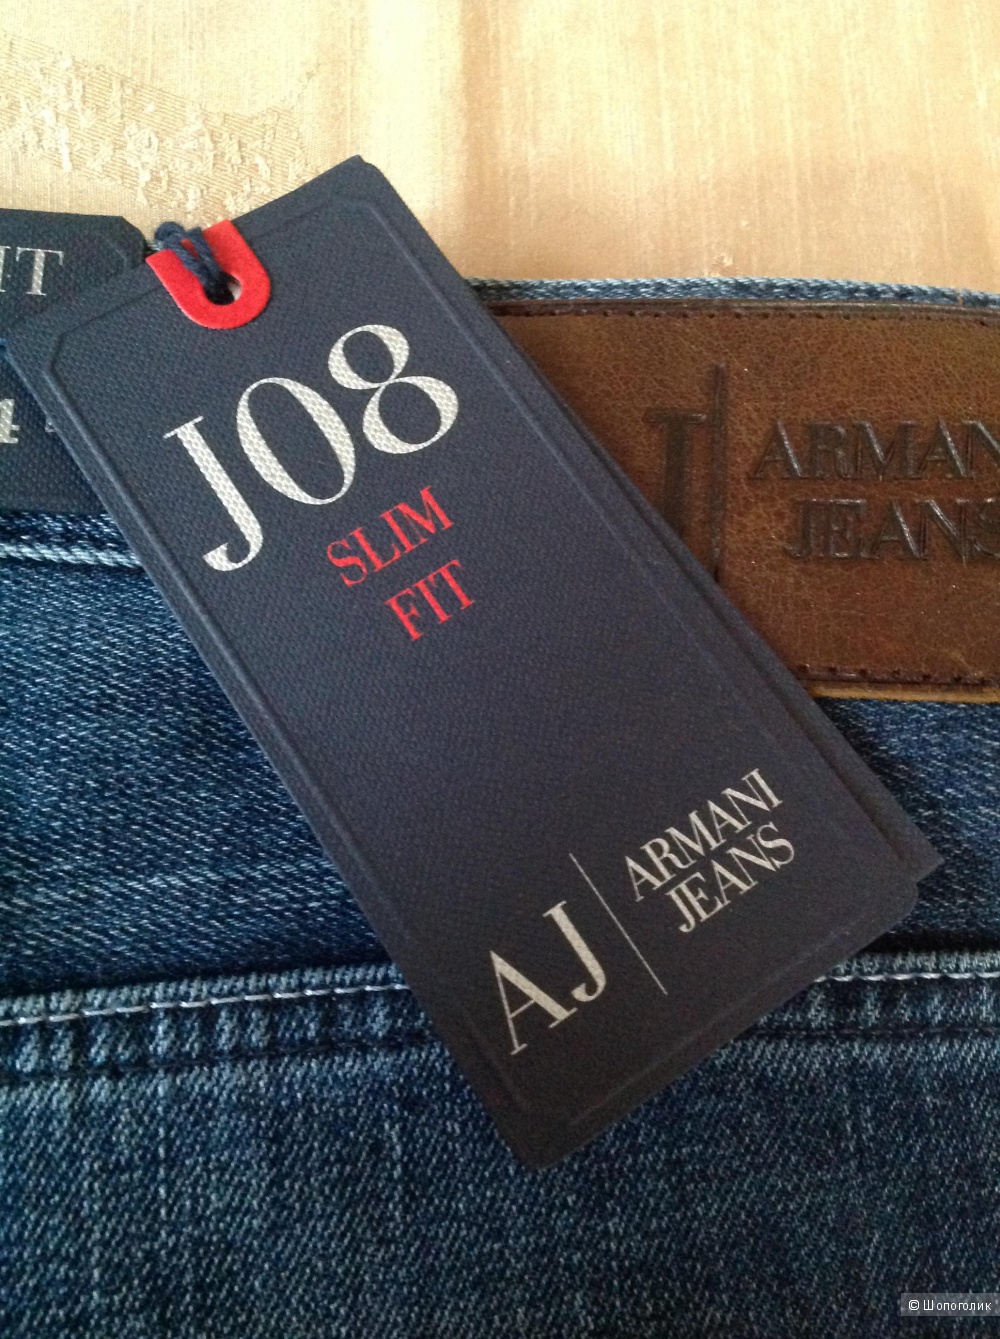 Джинсы Armani jeans J08, размер 38/34, на 52-54-56